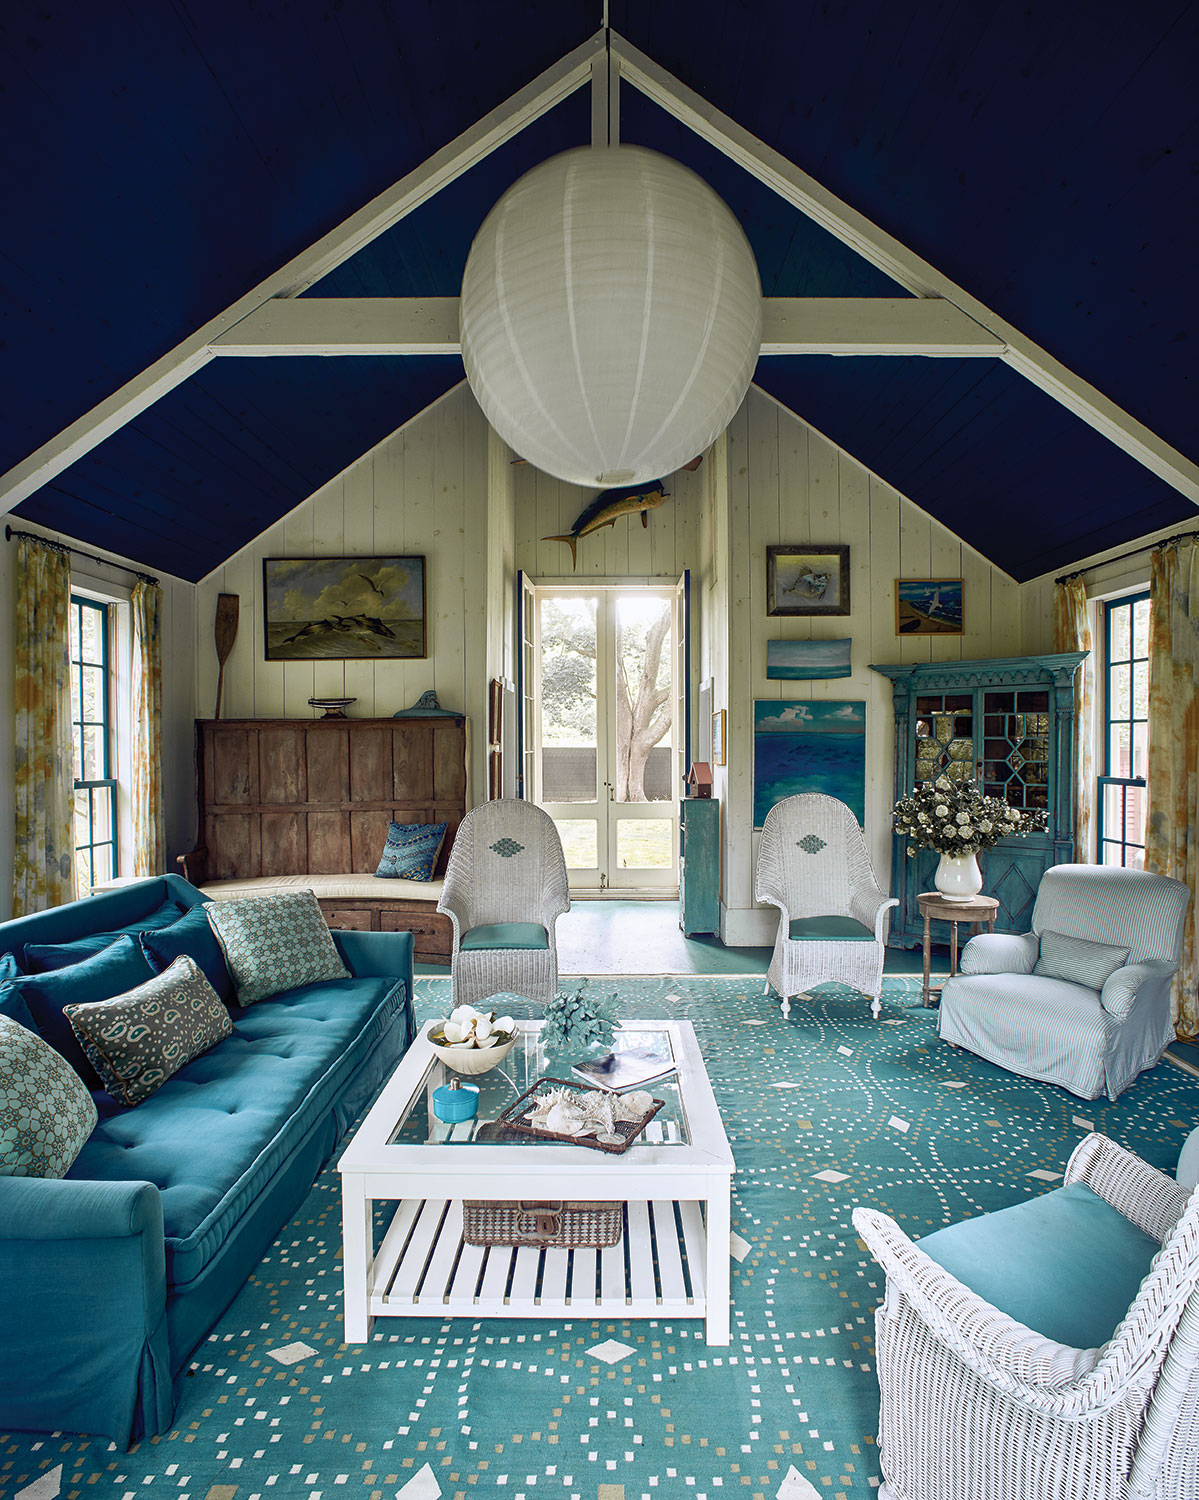 Pool house interior by designer Richard Keith Langham